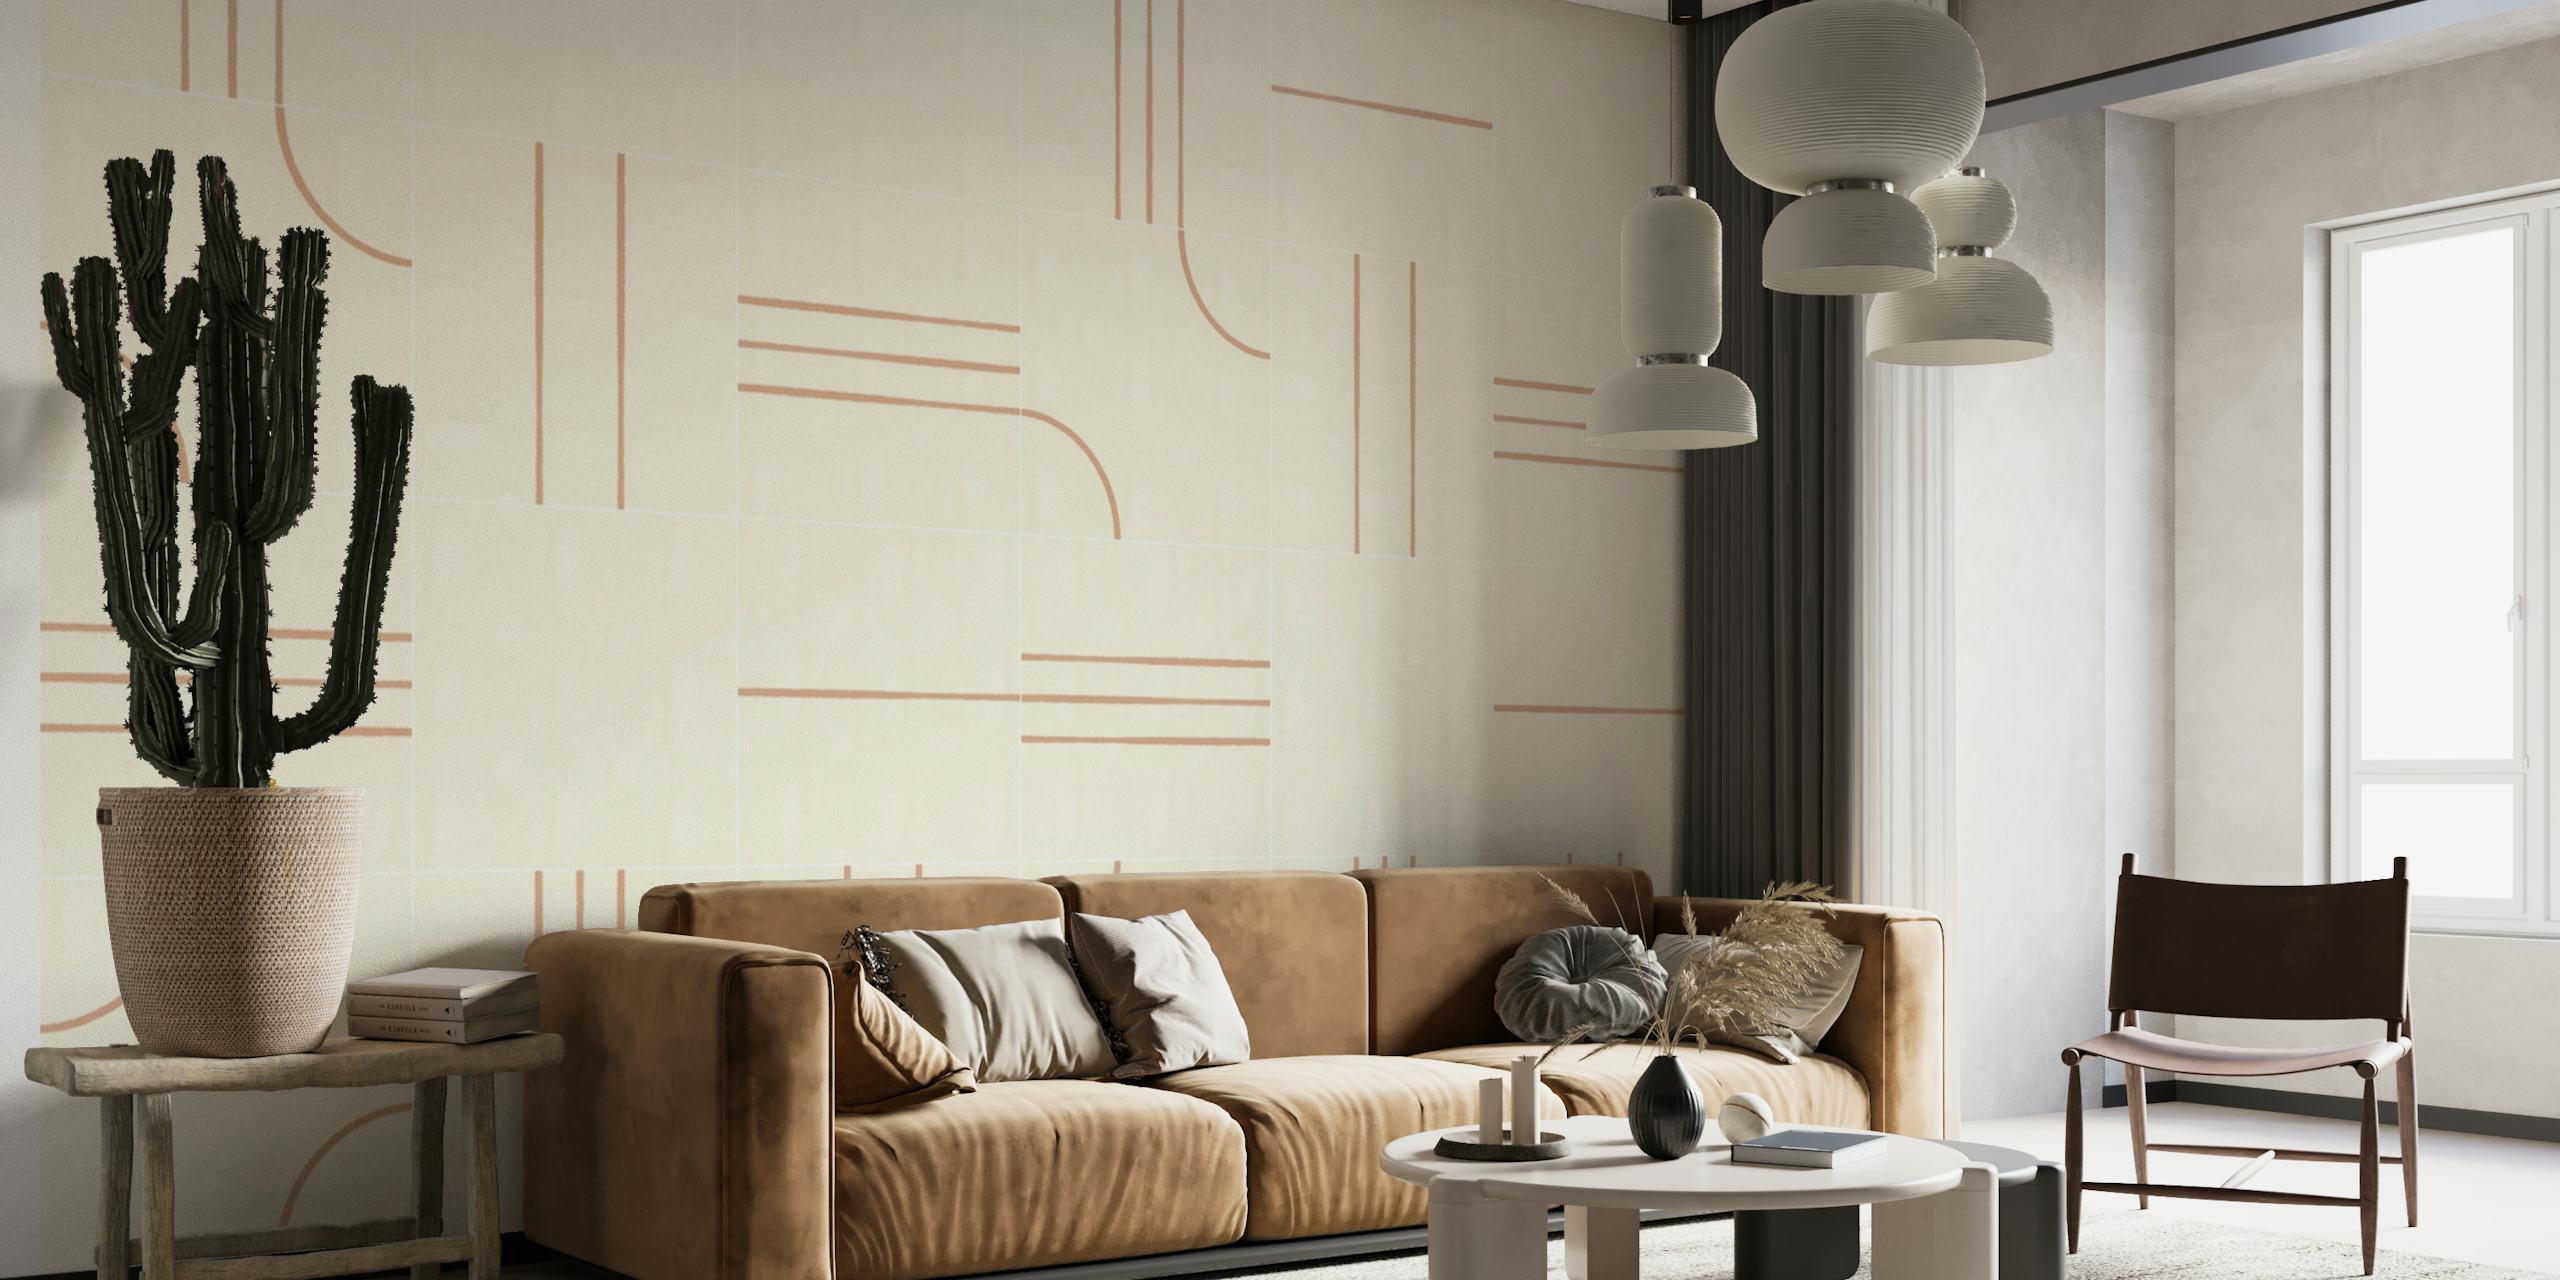 Beige wall mural with minimalist geometric tile pattern design